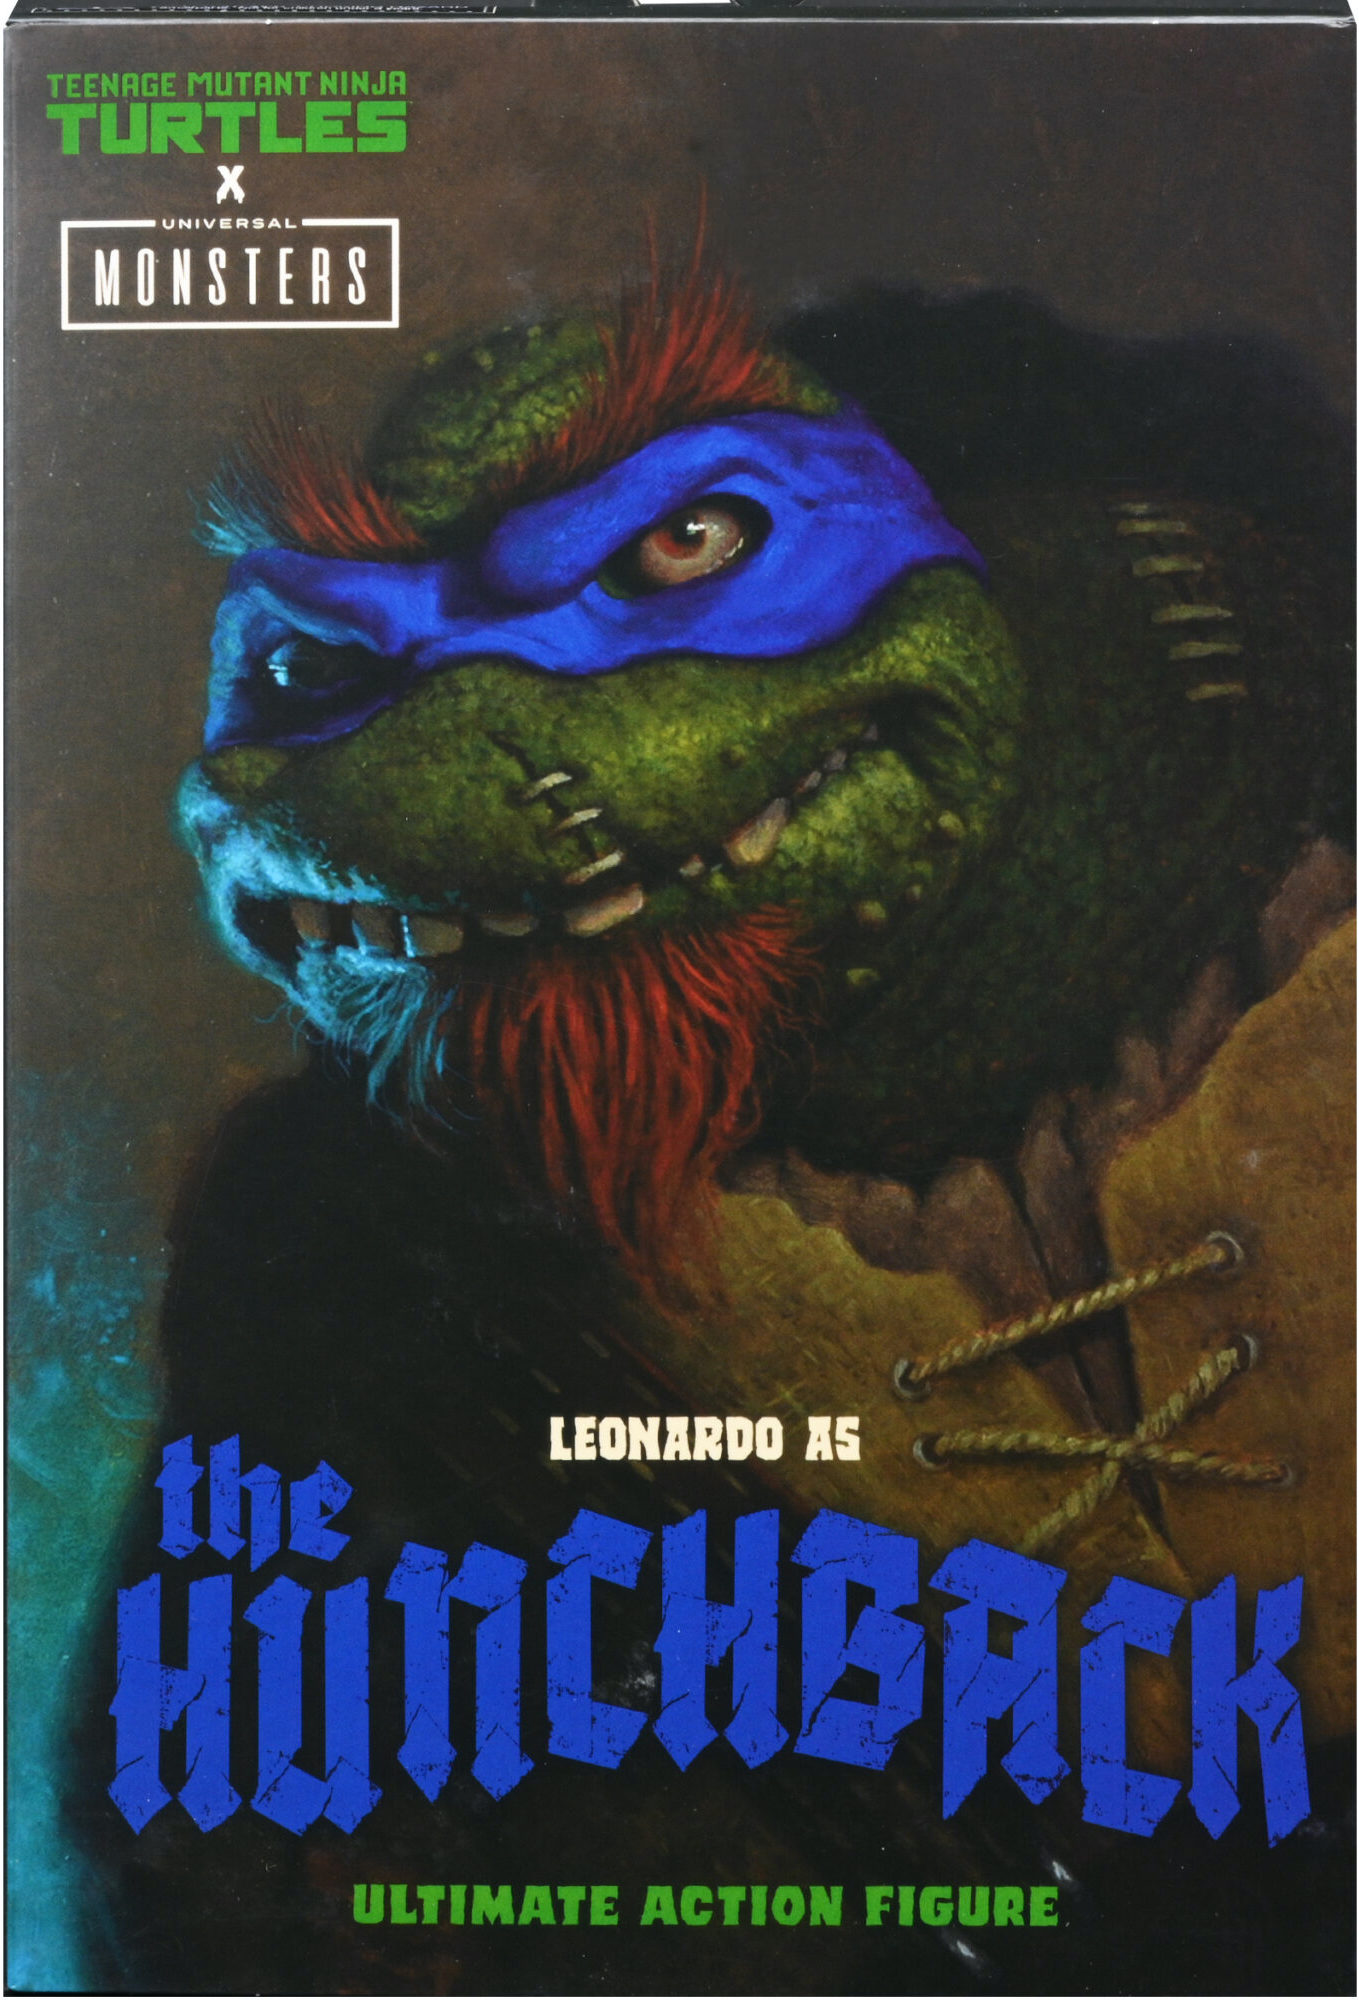 NECA's Ultimate Leonardo as the Creature from the Black Lagoon